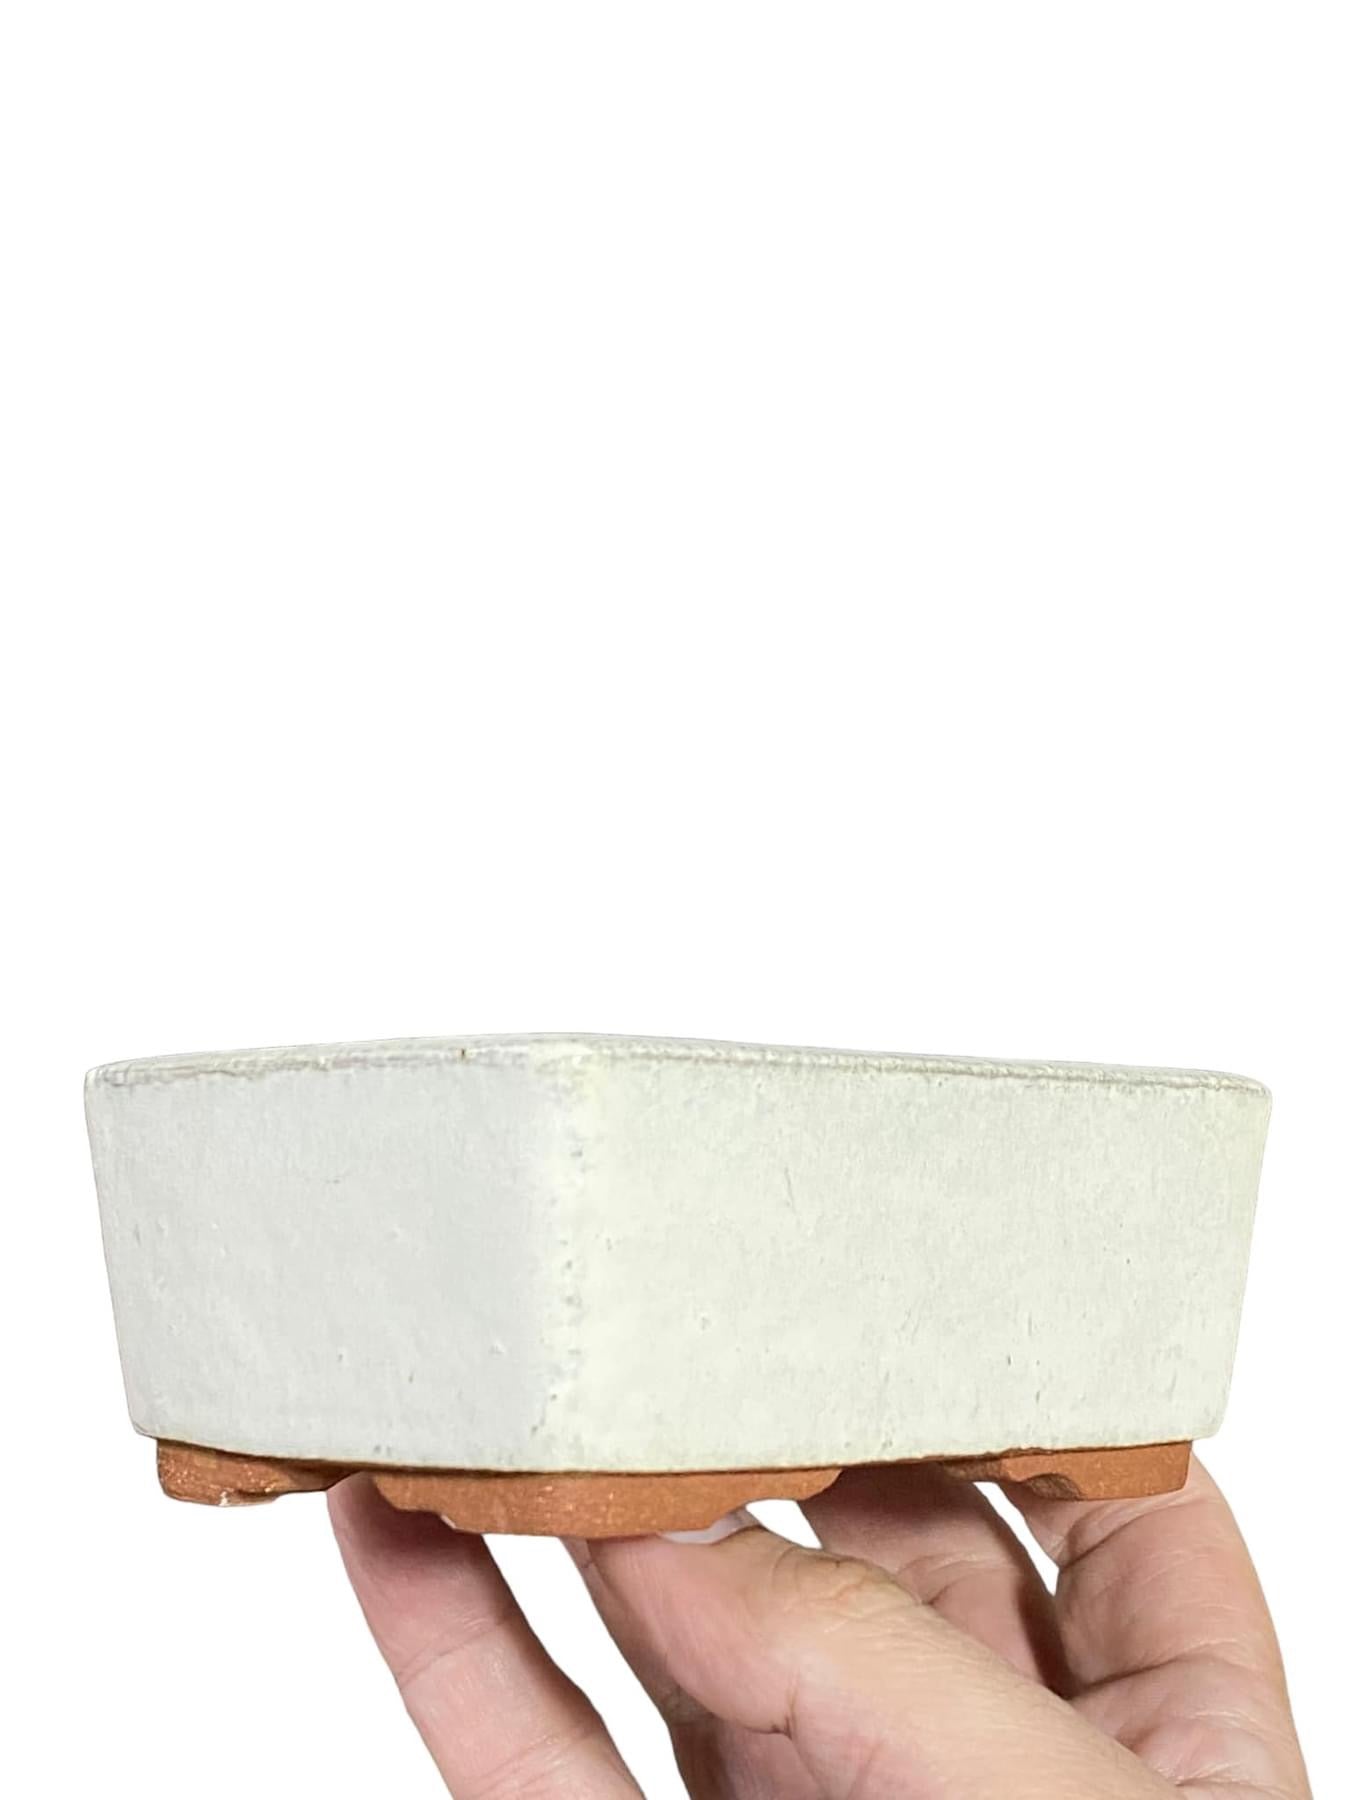 Eimei - Subdued White Glazed Bonsai Pot (4-3/4” wide)